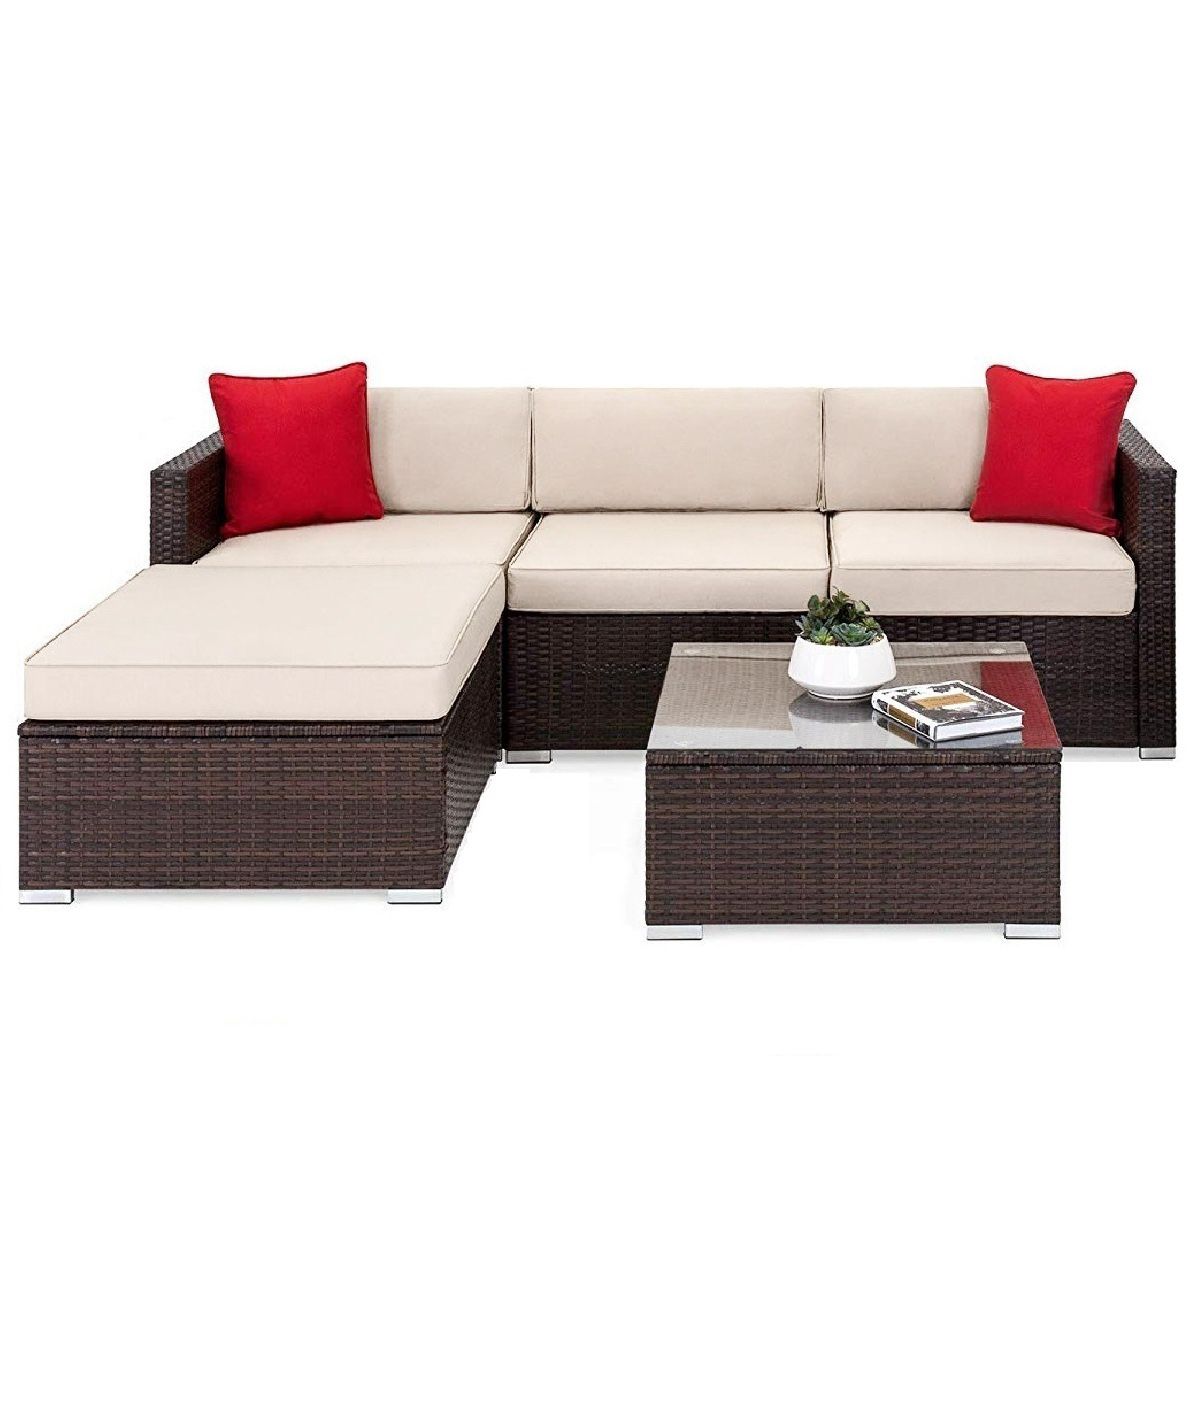 5 Piece Patio Sofa Outdoor Furniture Set